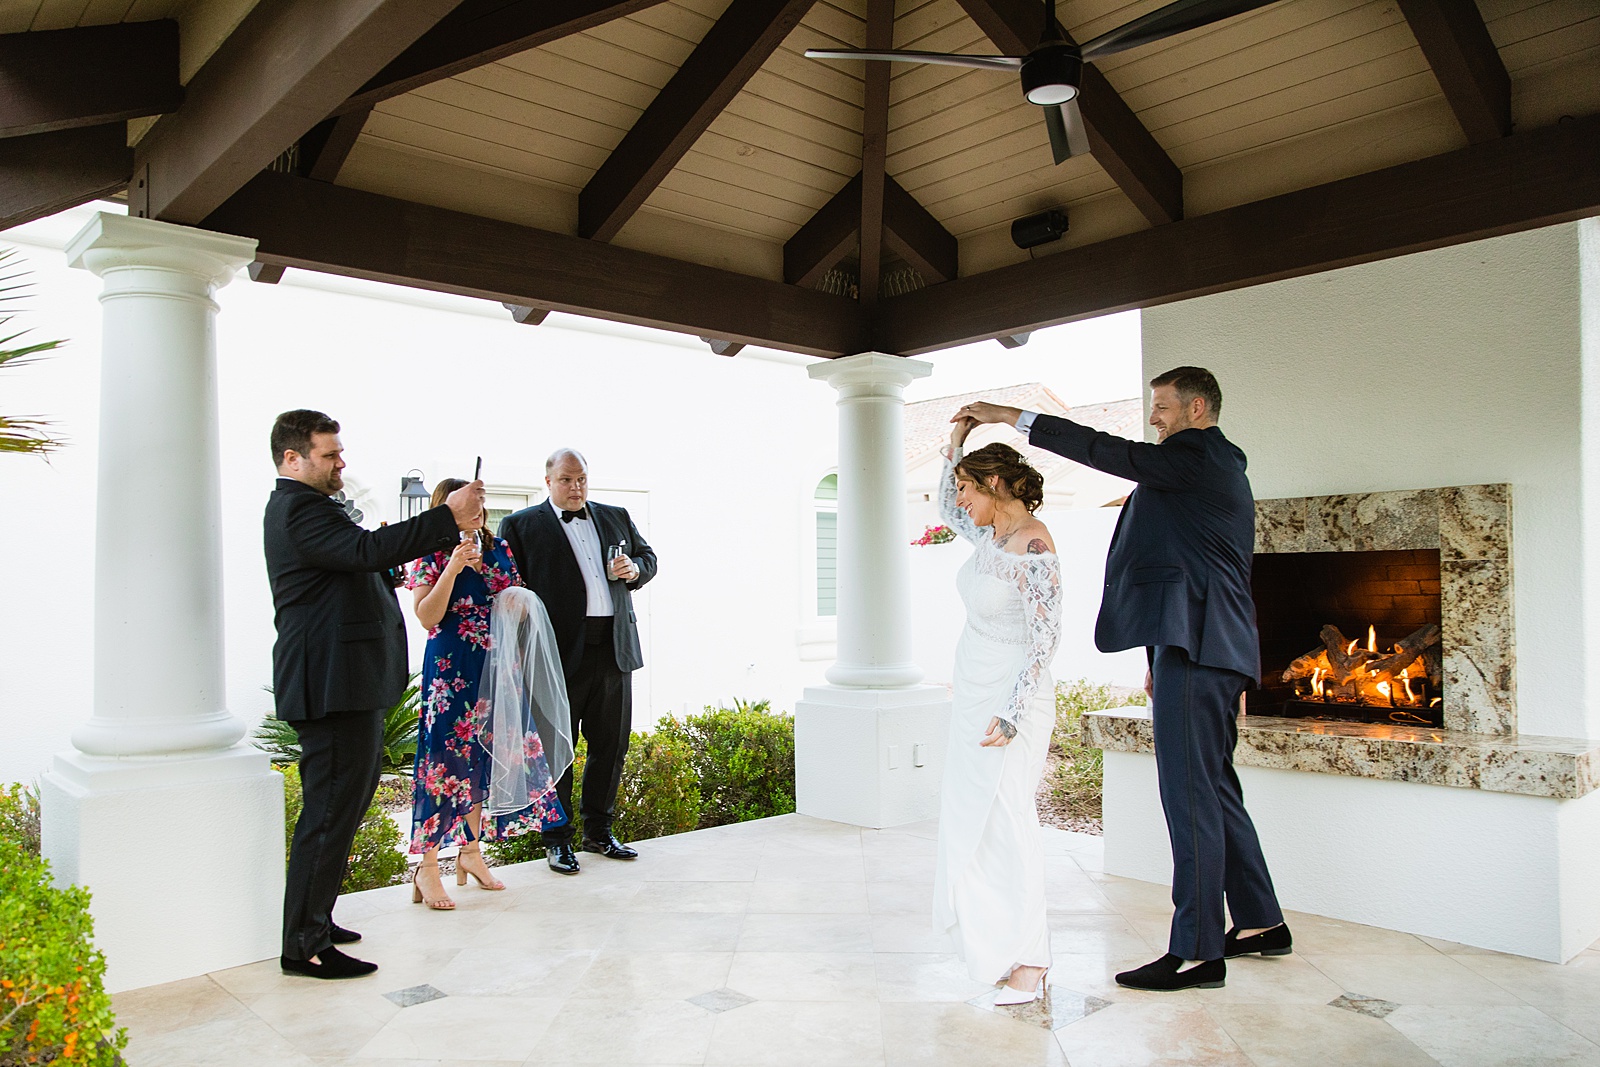 Bride and groom sharing first dance at their backyard wedding reception by Arizona wedding photographer PMA Photography.